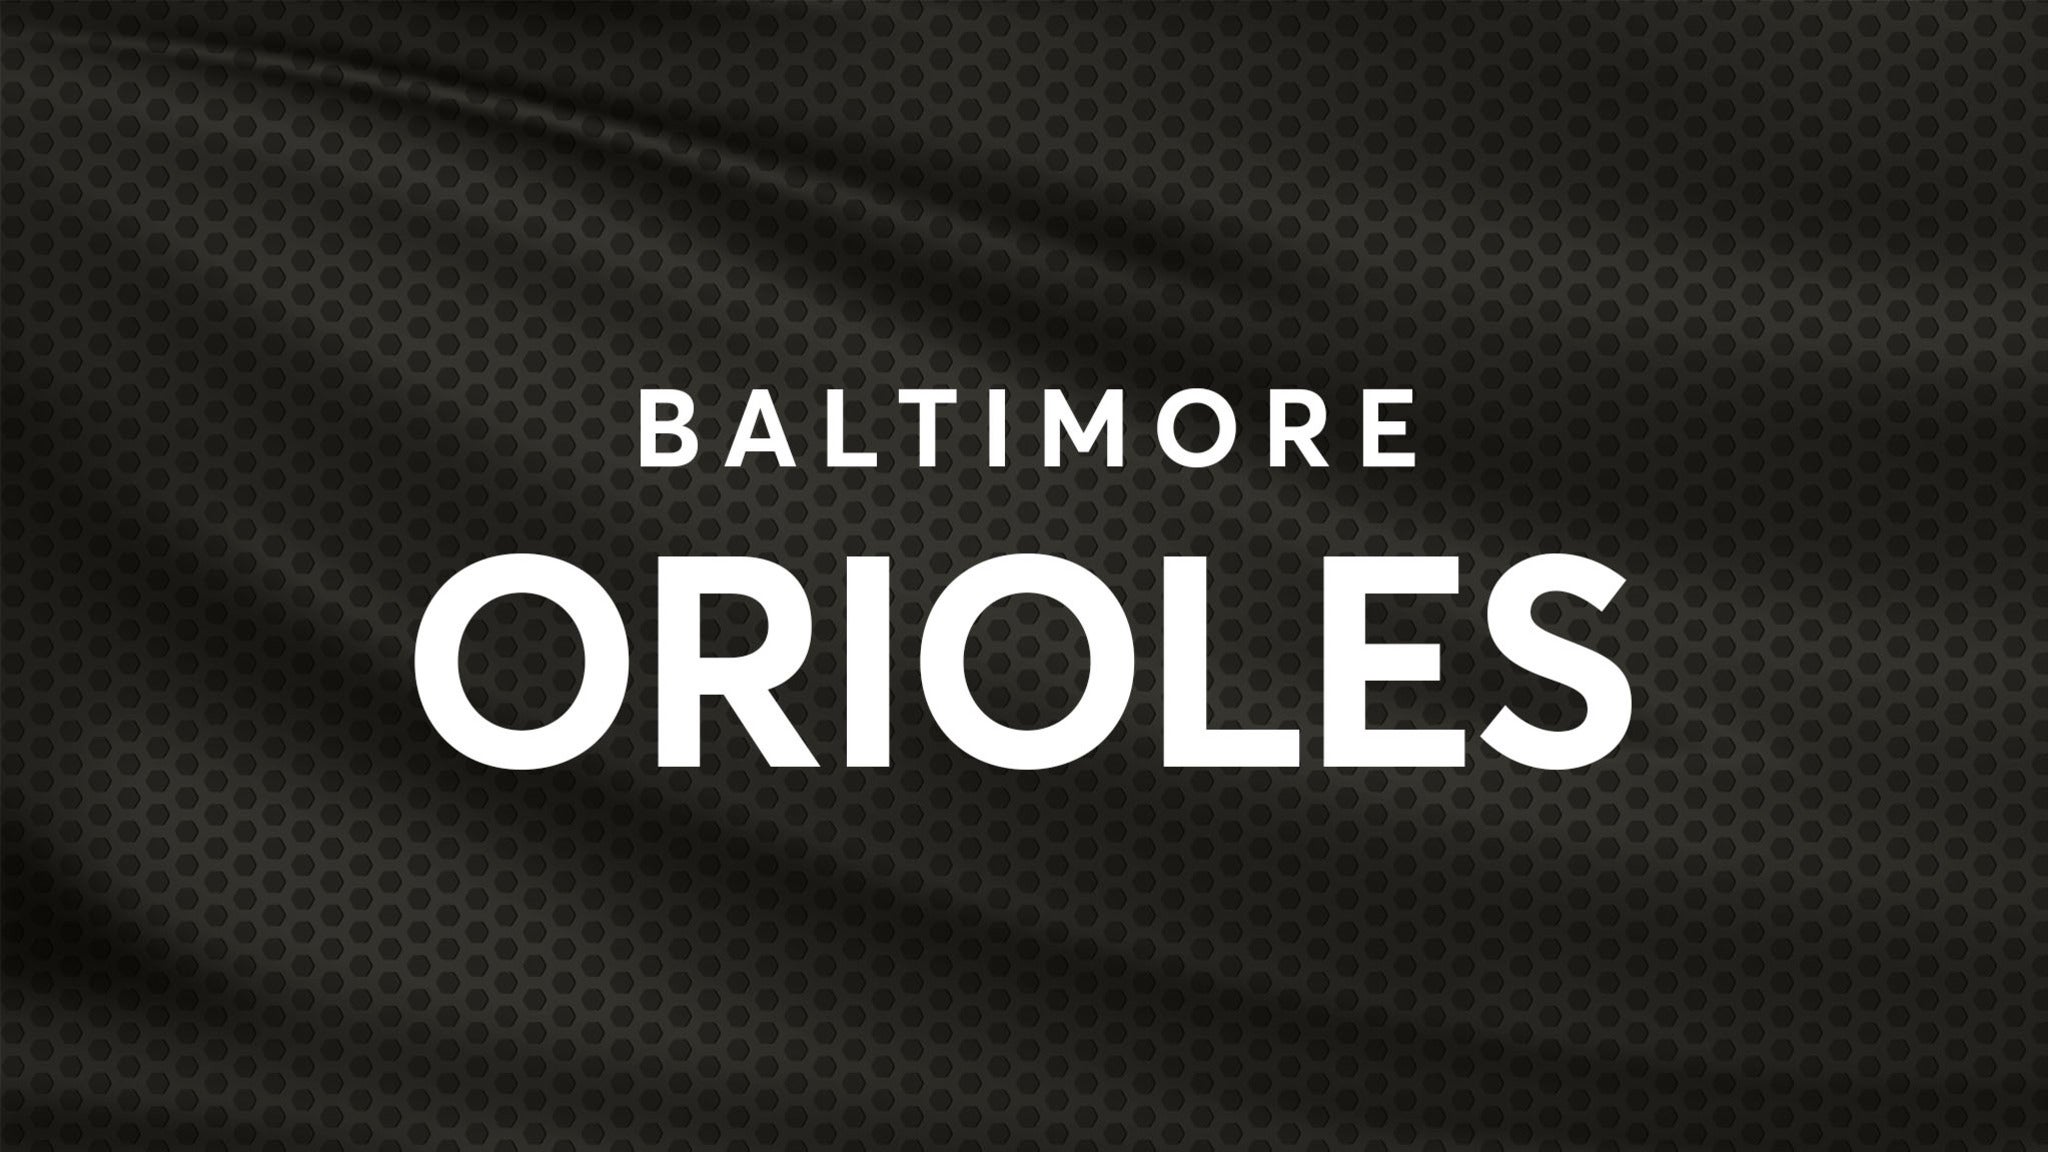 Baltimore Orioles vs. Detroit Tigers at Ed Smith Stadium - Sarasota, FL 34237